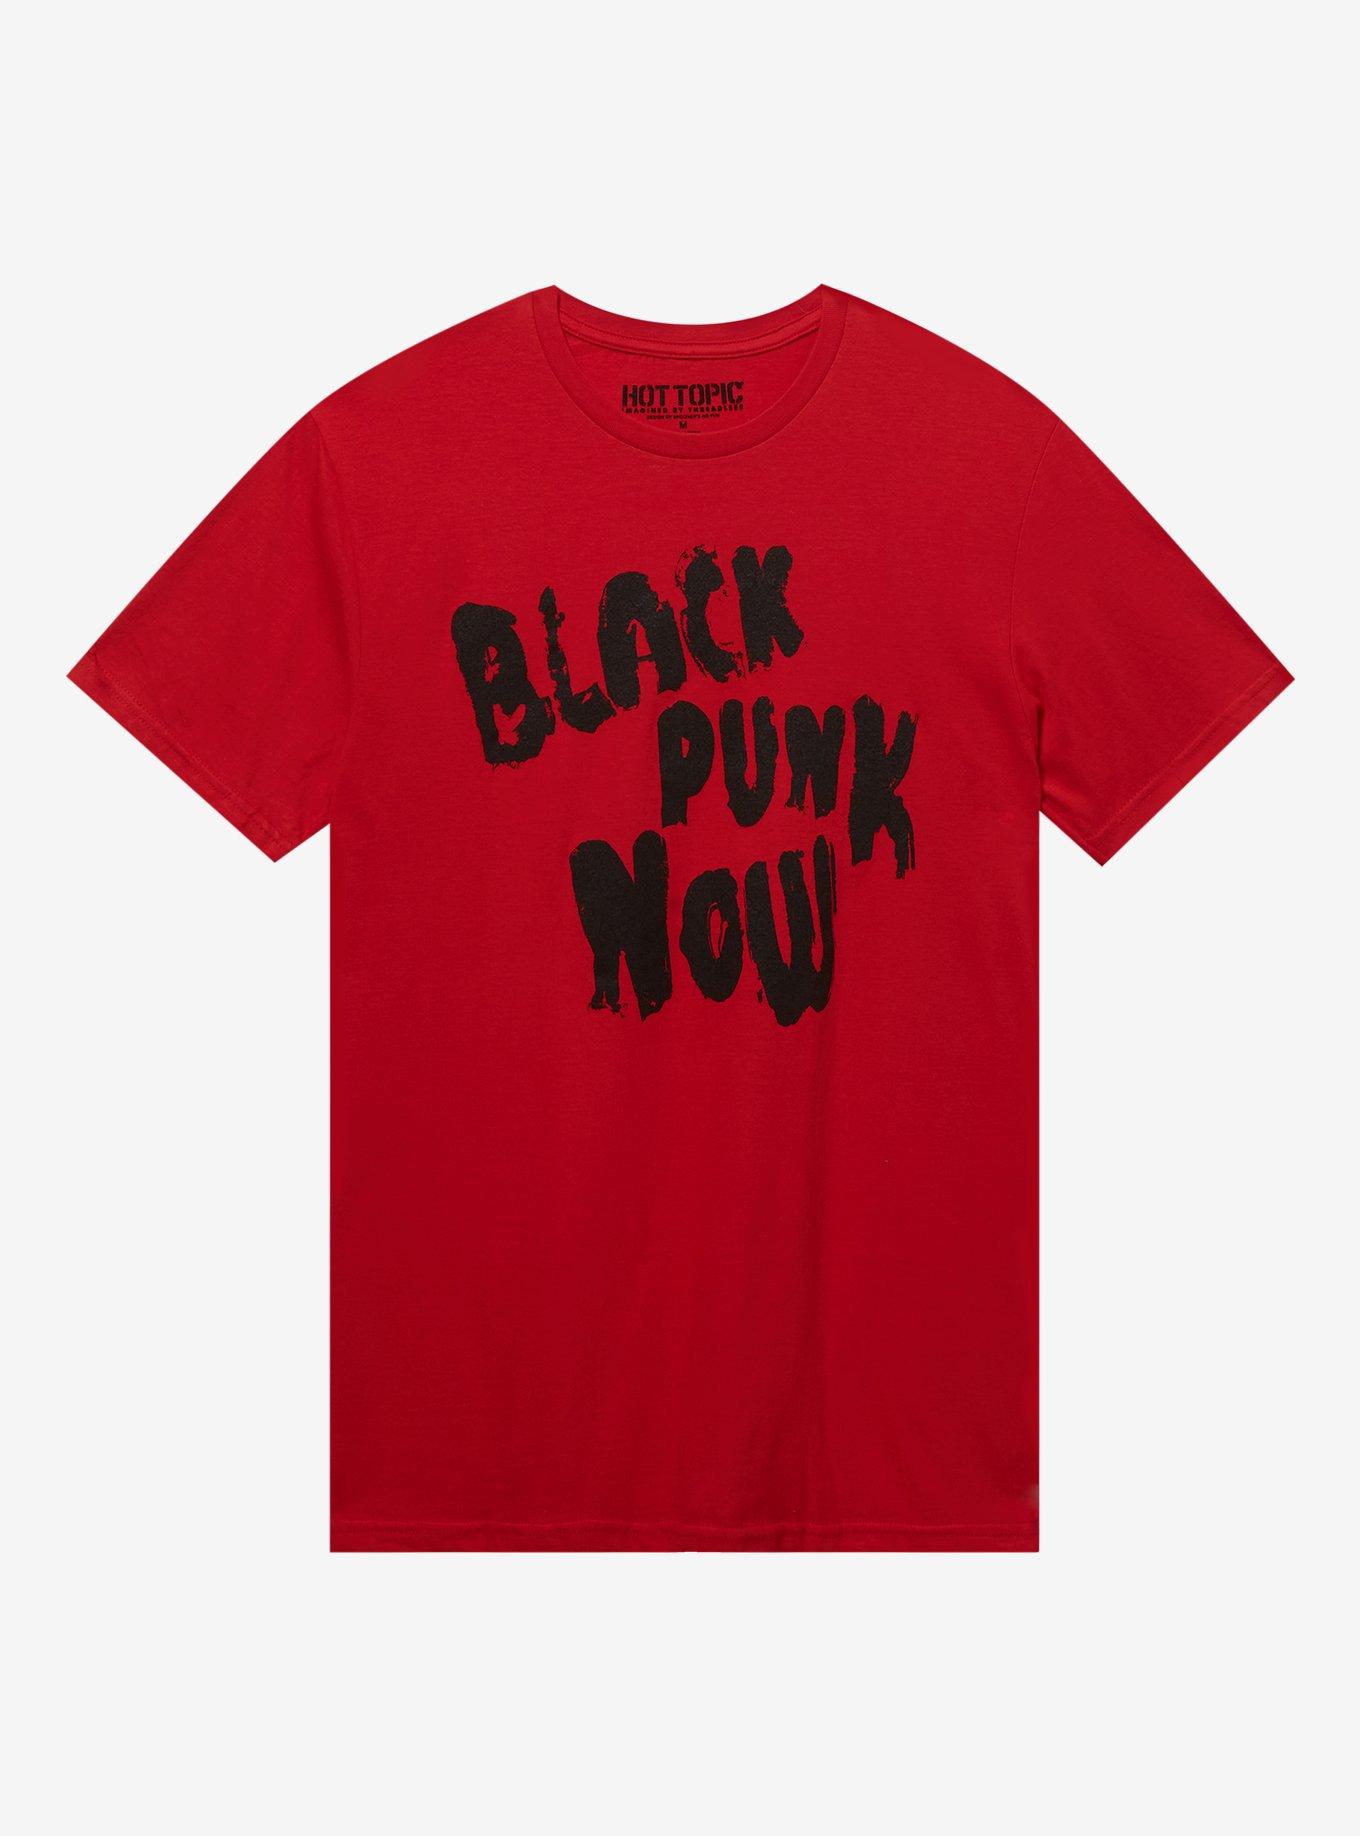 Black Punk Now Logo T-Shirt By Spooner's No Fun